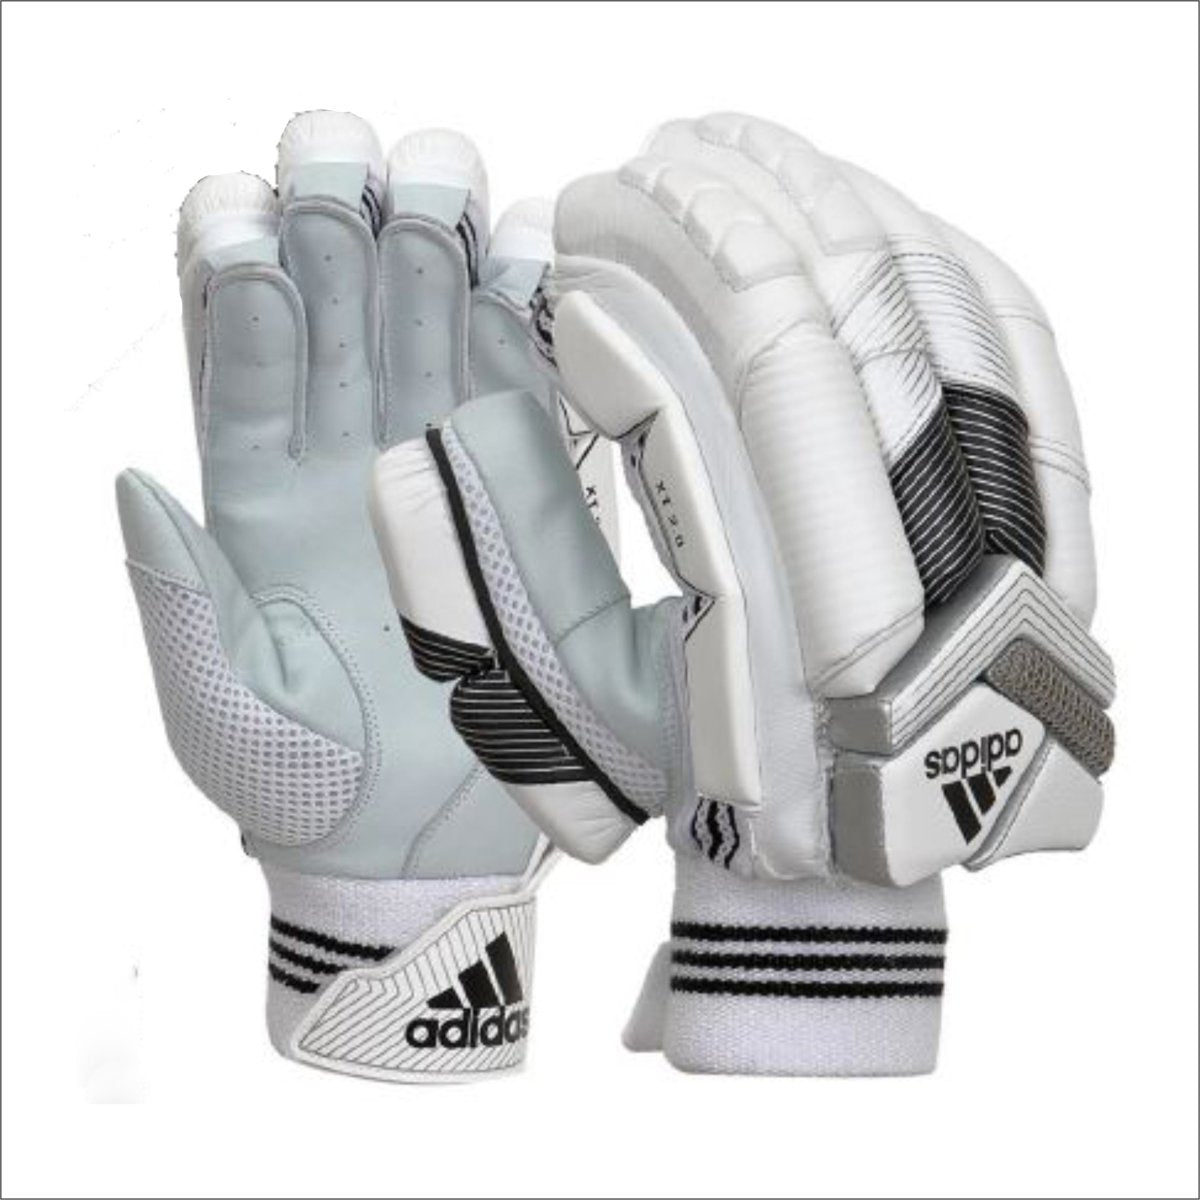 Adidas XT 2.0 Cricket Batting Gloves